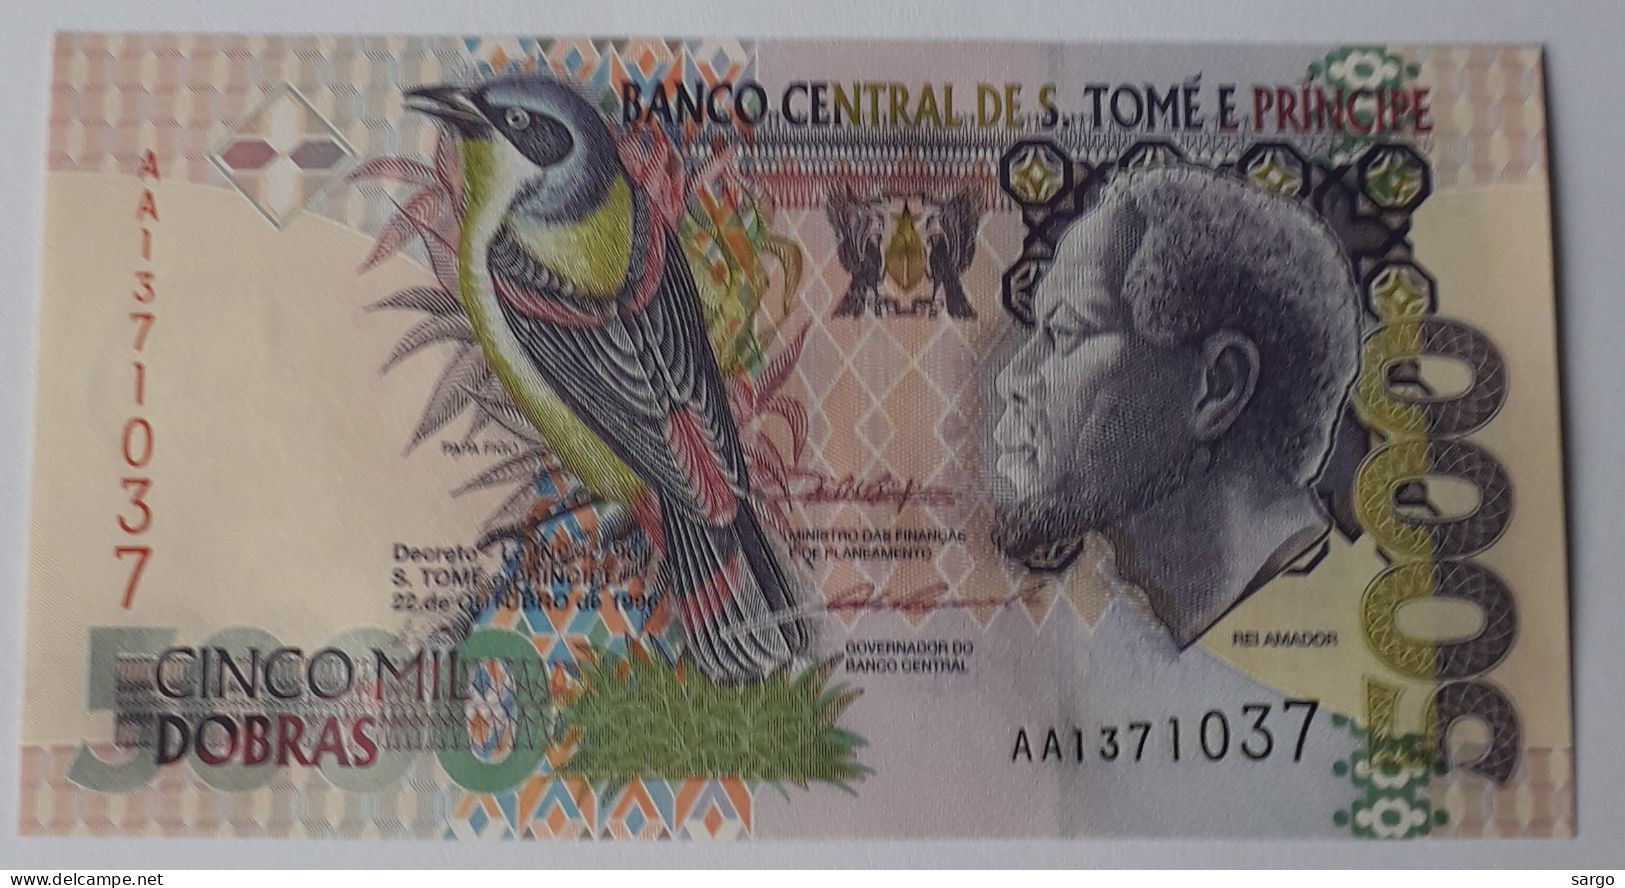 SAINT THOMAS AND PRINCIPE  - 5.000 DOLLARS - P 65  (1996) - UNC -  BANKNOTES - PAPER MONEY - Sao Tome And Principe